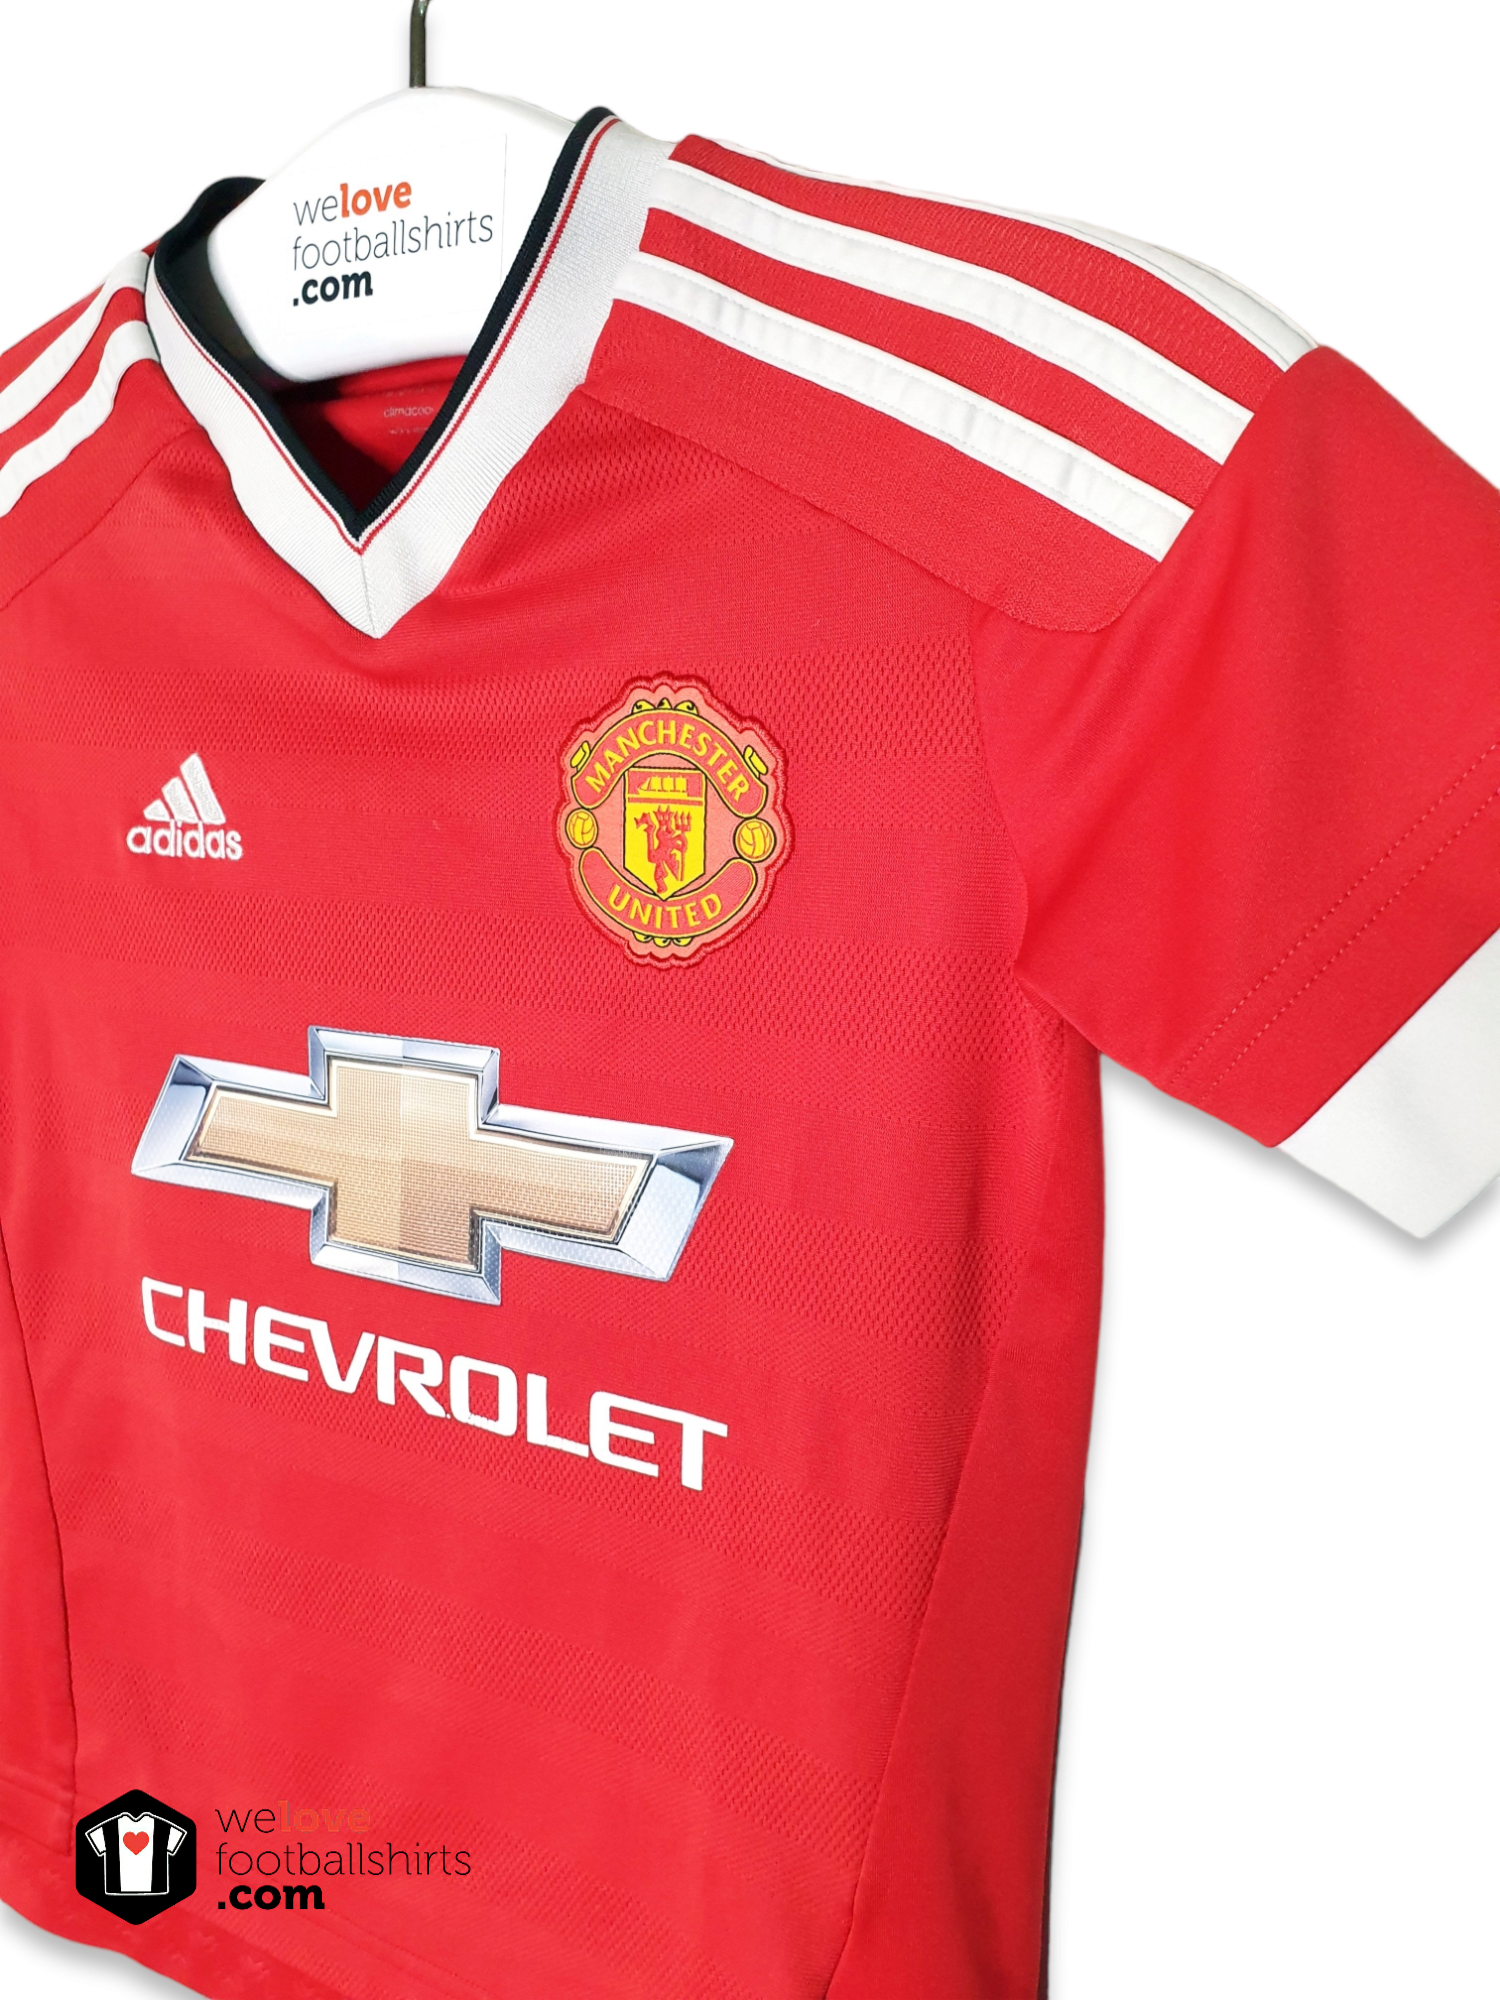 attent Smeltend Belegering Adidas voetbalshirt Manchester United 2015/16 - Welovefootballshirts.com